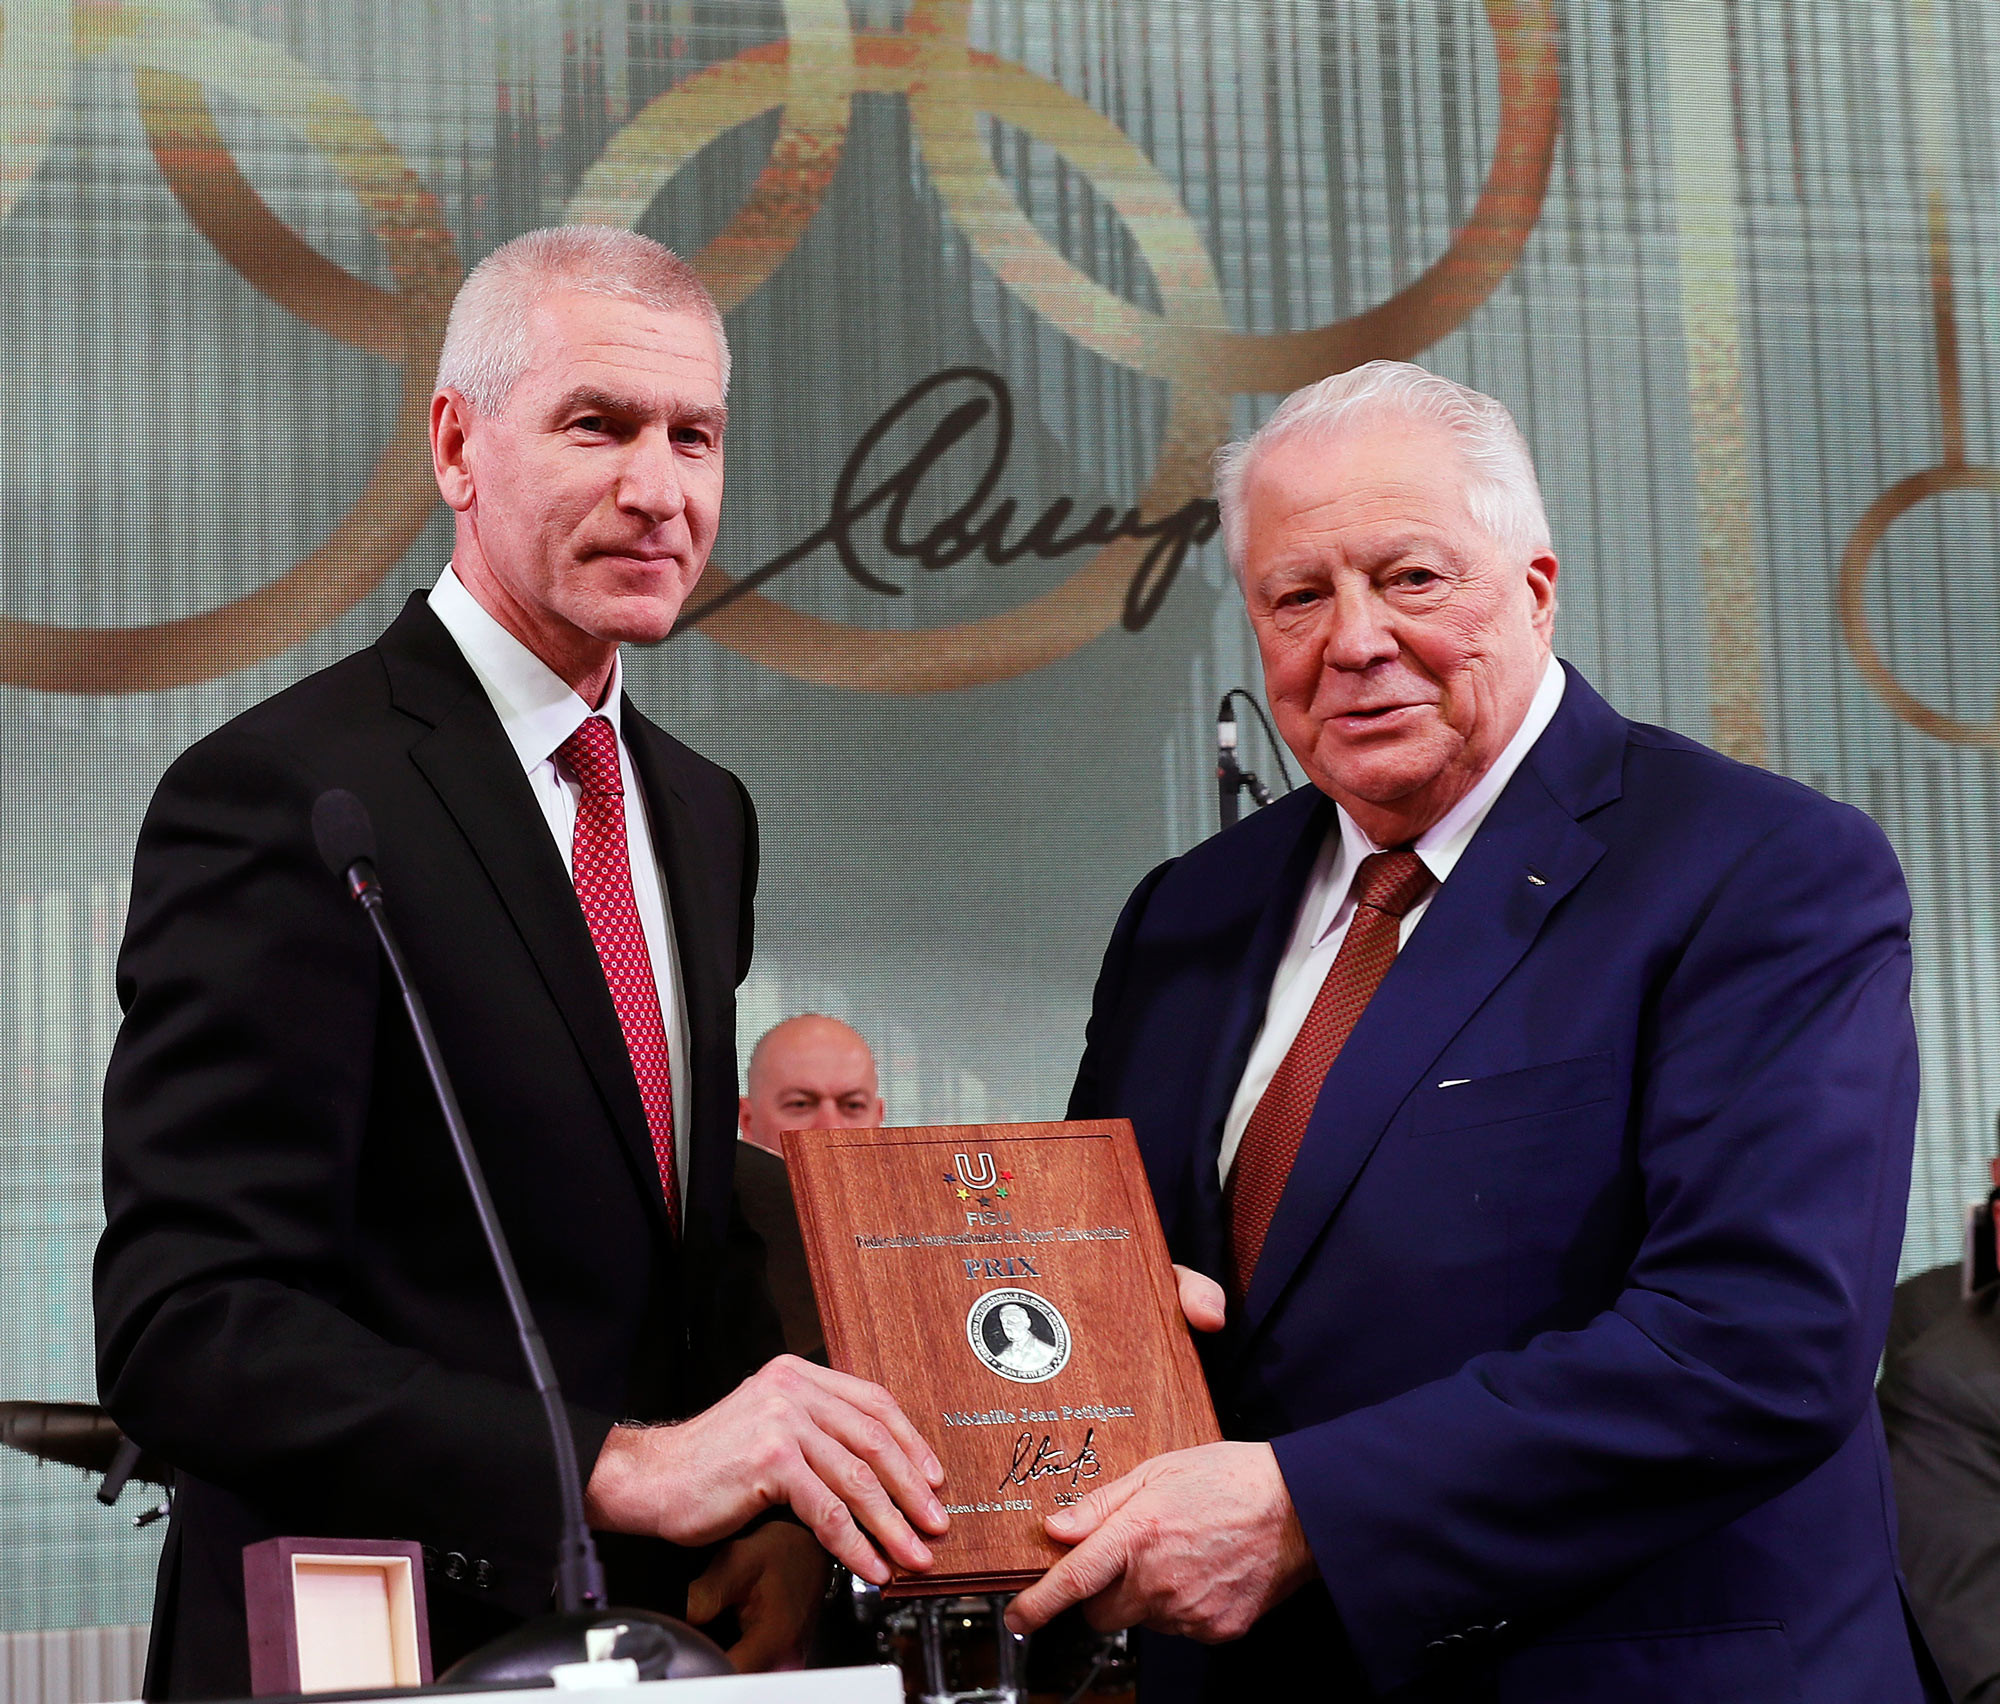 FISU President Oleg Matytsin, left, presented the Jean Peititjean Medal to Vitaly Smirnov ©FISU